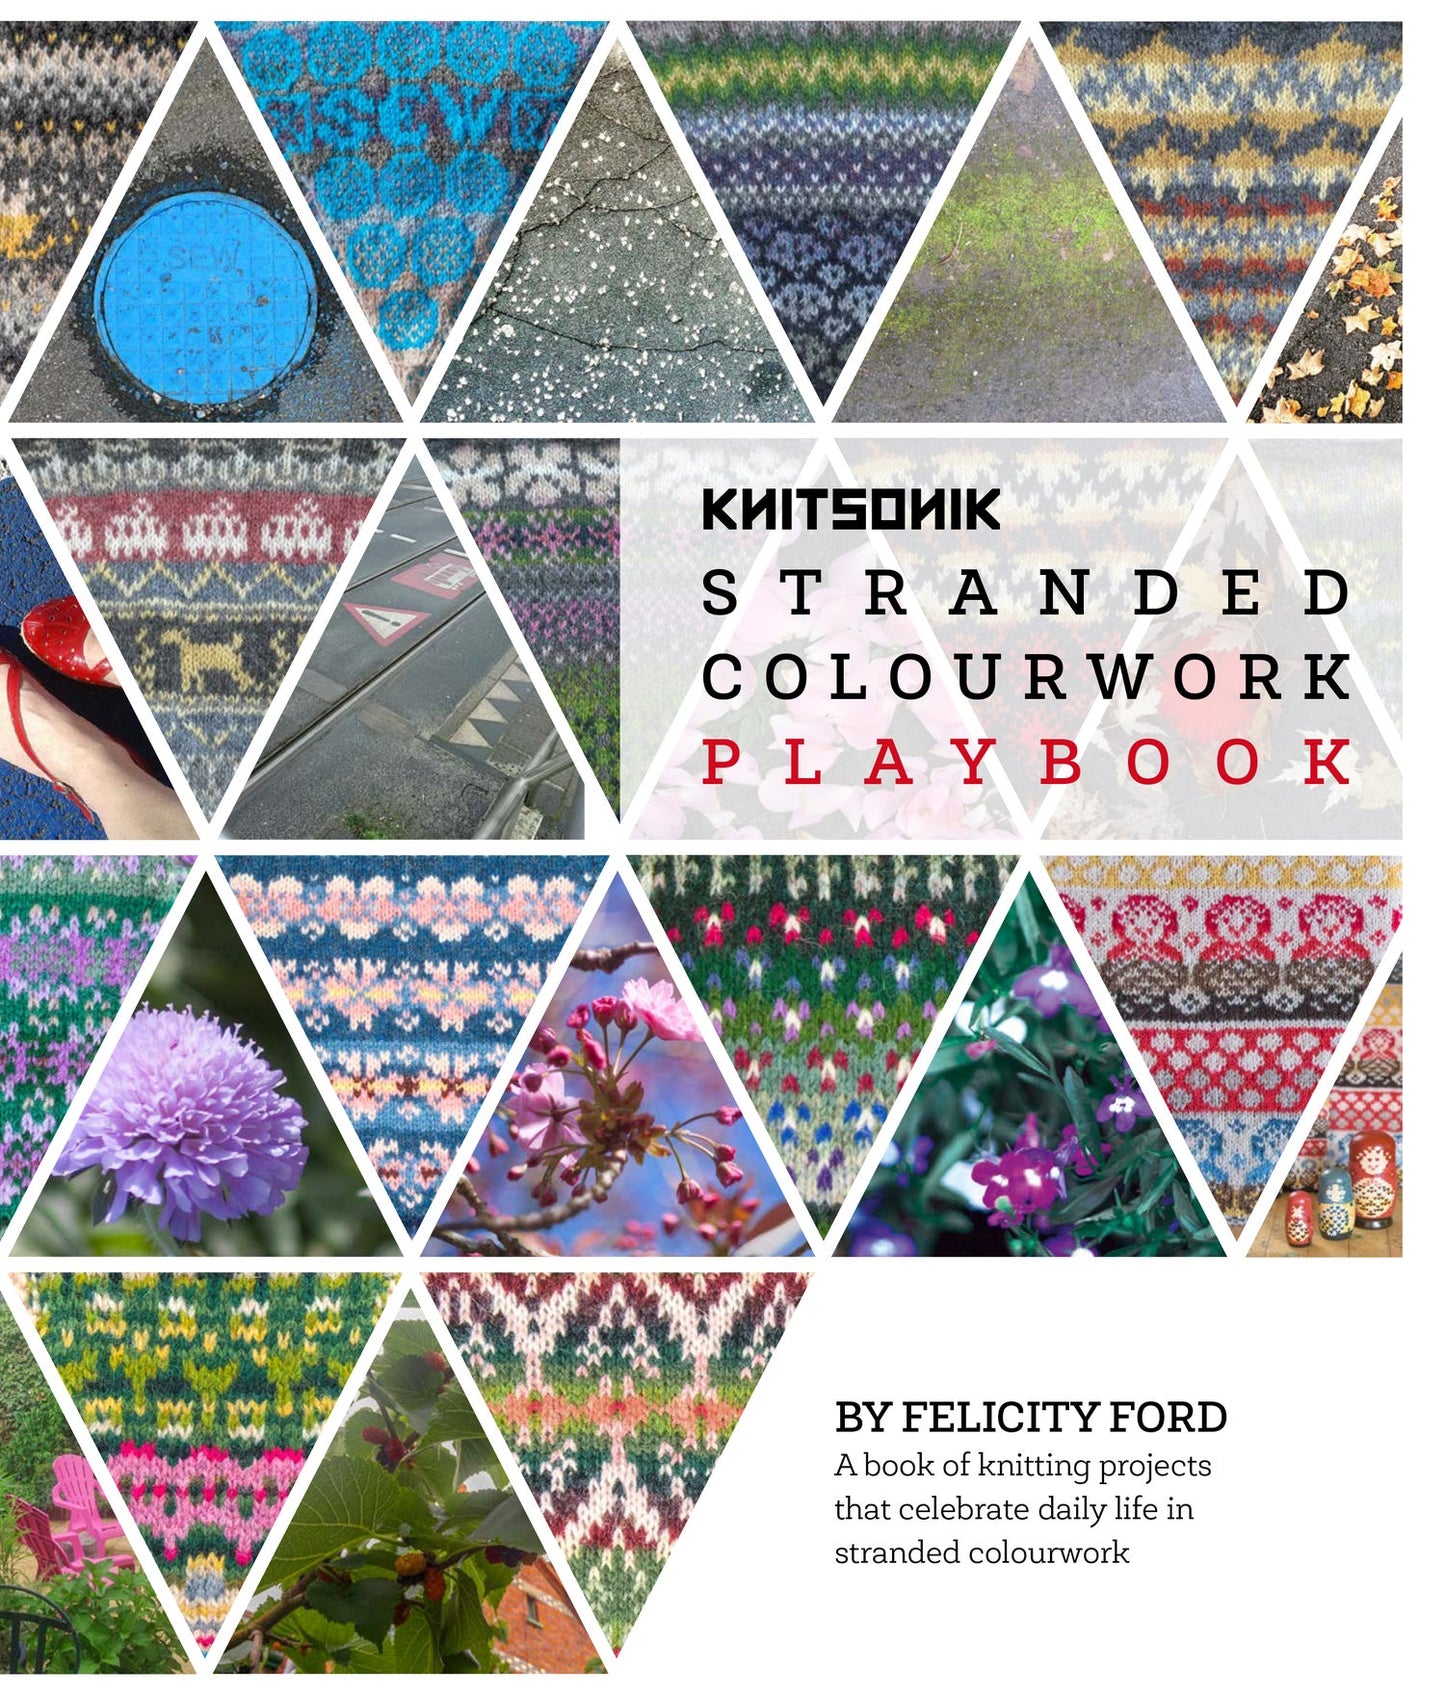 Knitsonik Stranded Colourwork Playbook